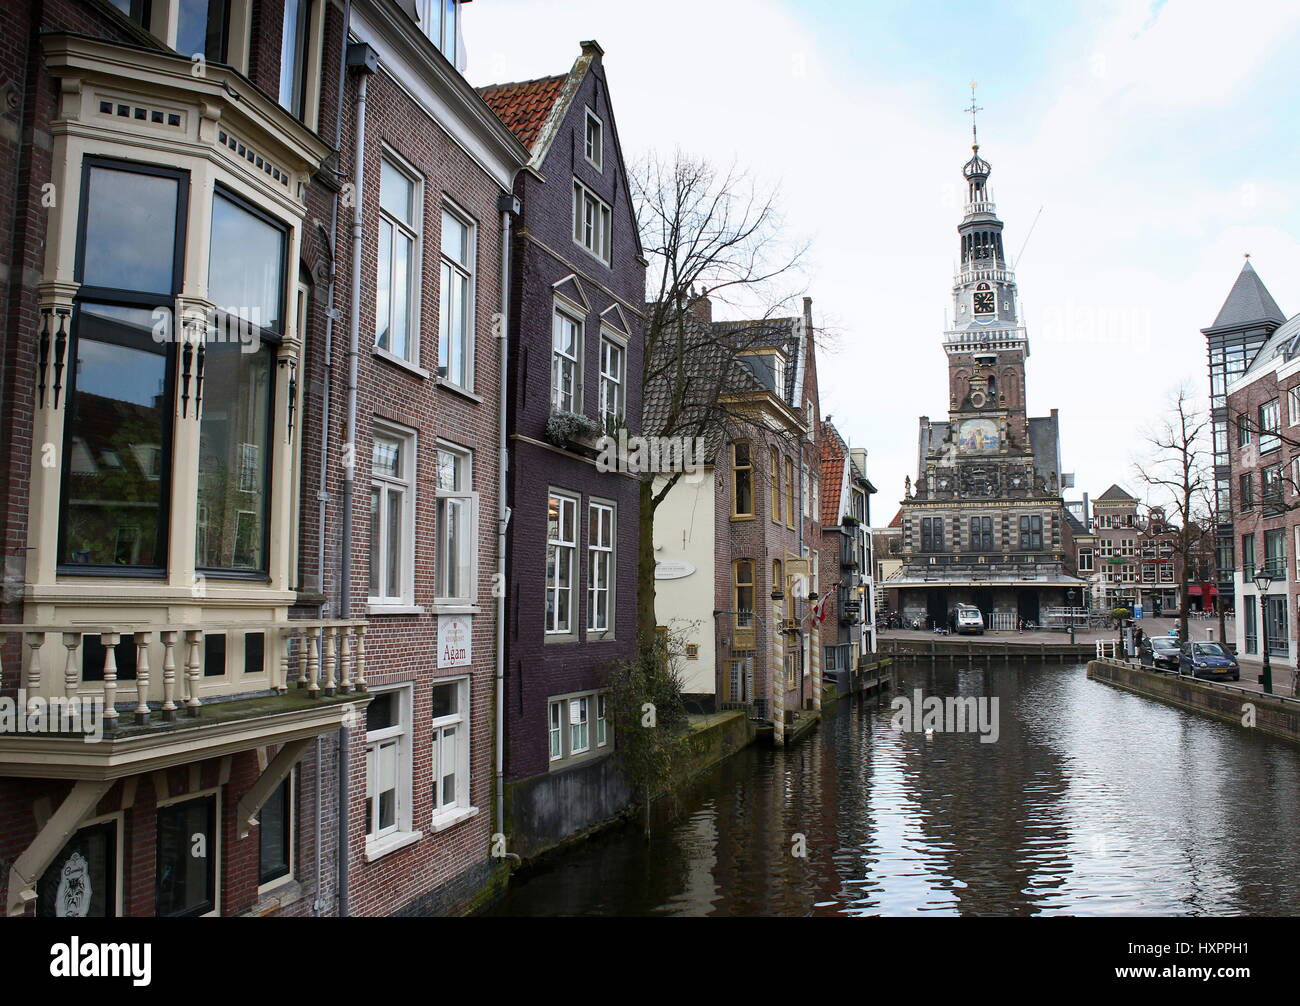 Inizio del XVII secolo Waag (casa di pesatura) a piazza Waagplein a Alkmaar, Paesi Bassi. Visto da Luttik Oudorp / Zijdam canal Foto Stock